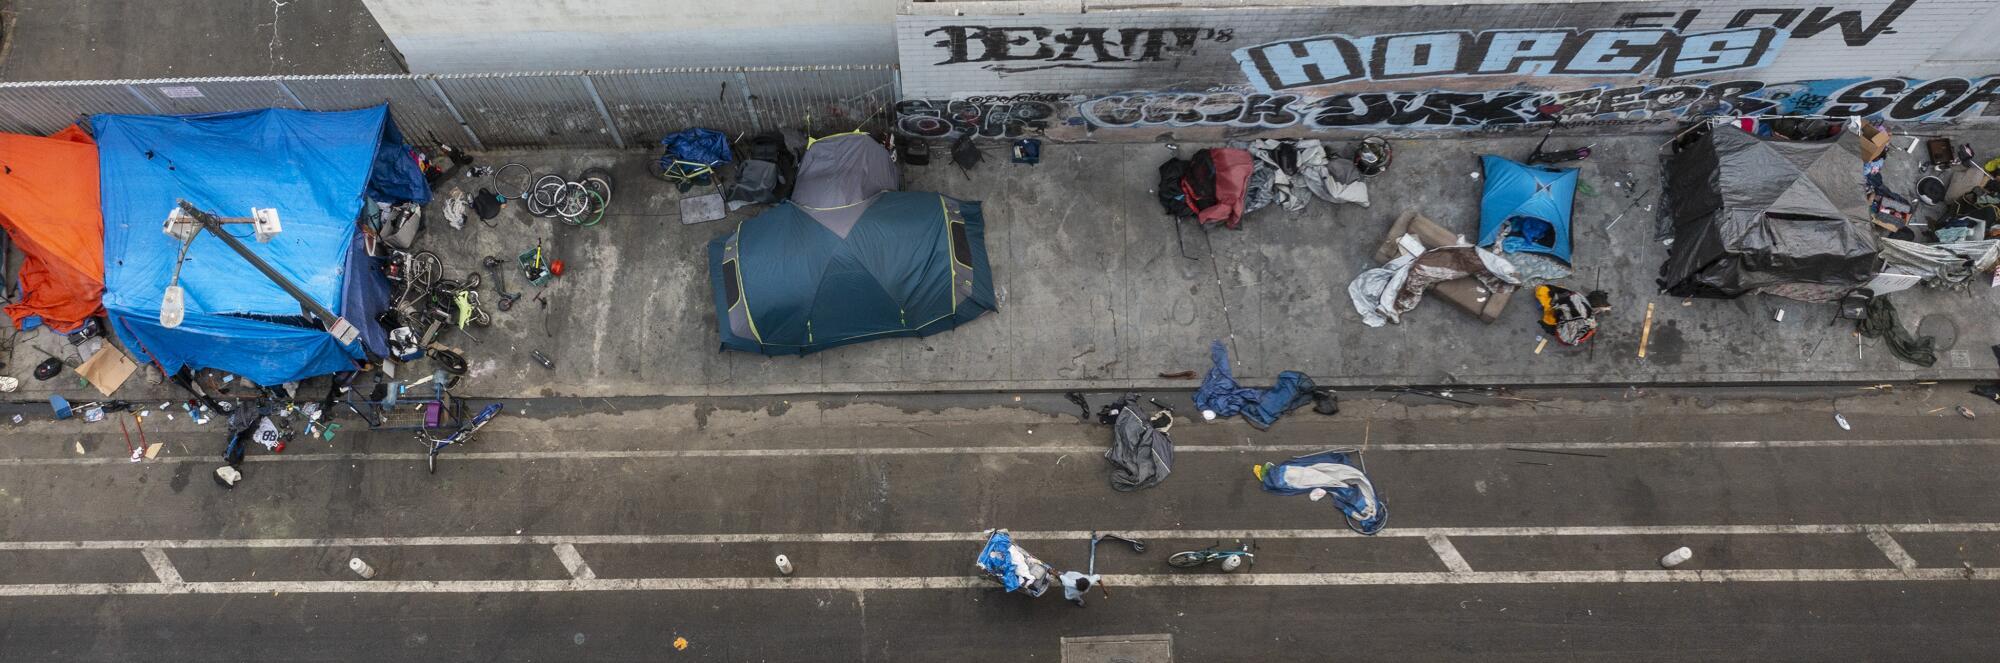 Aerial view of homeless encampments on a sidewalk